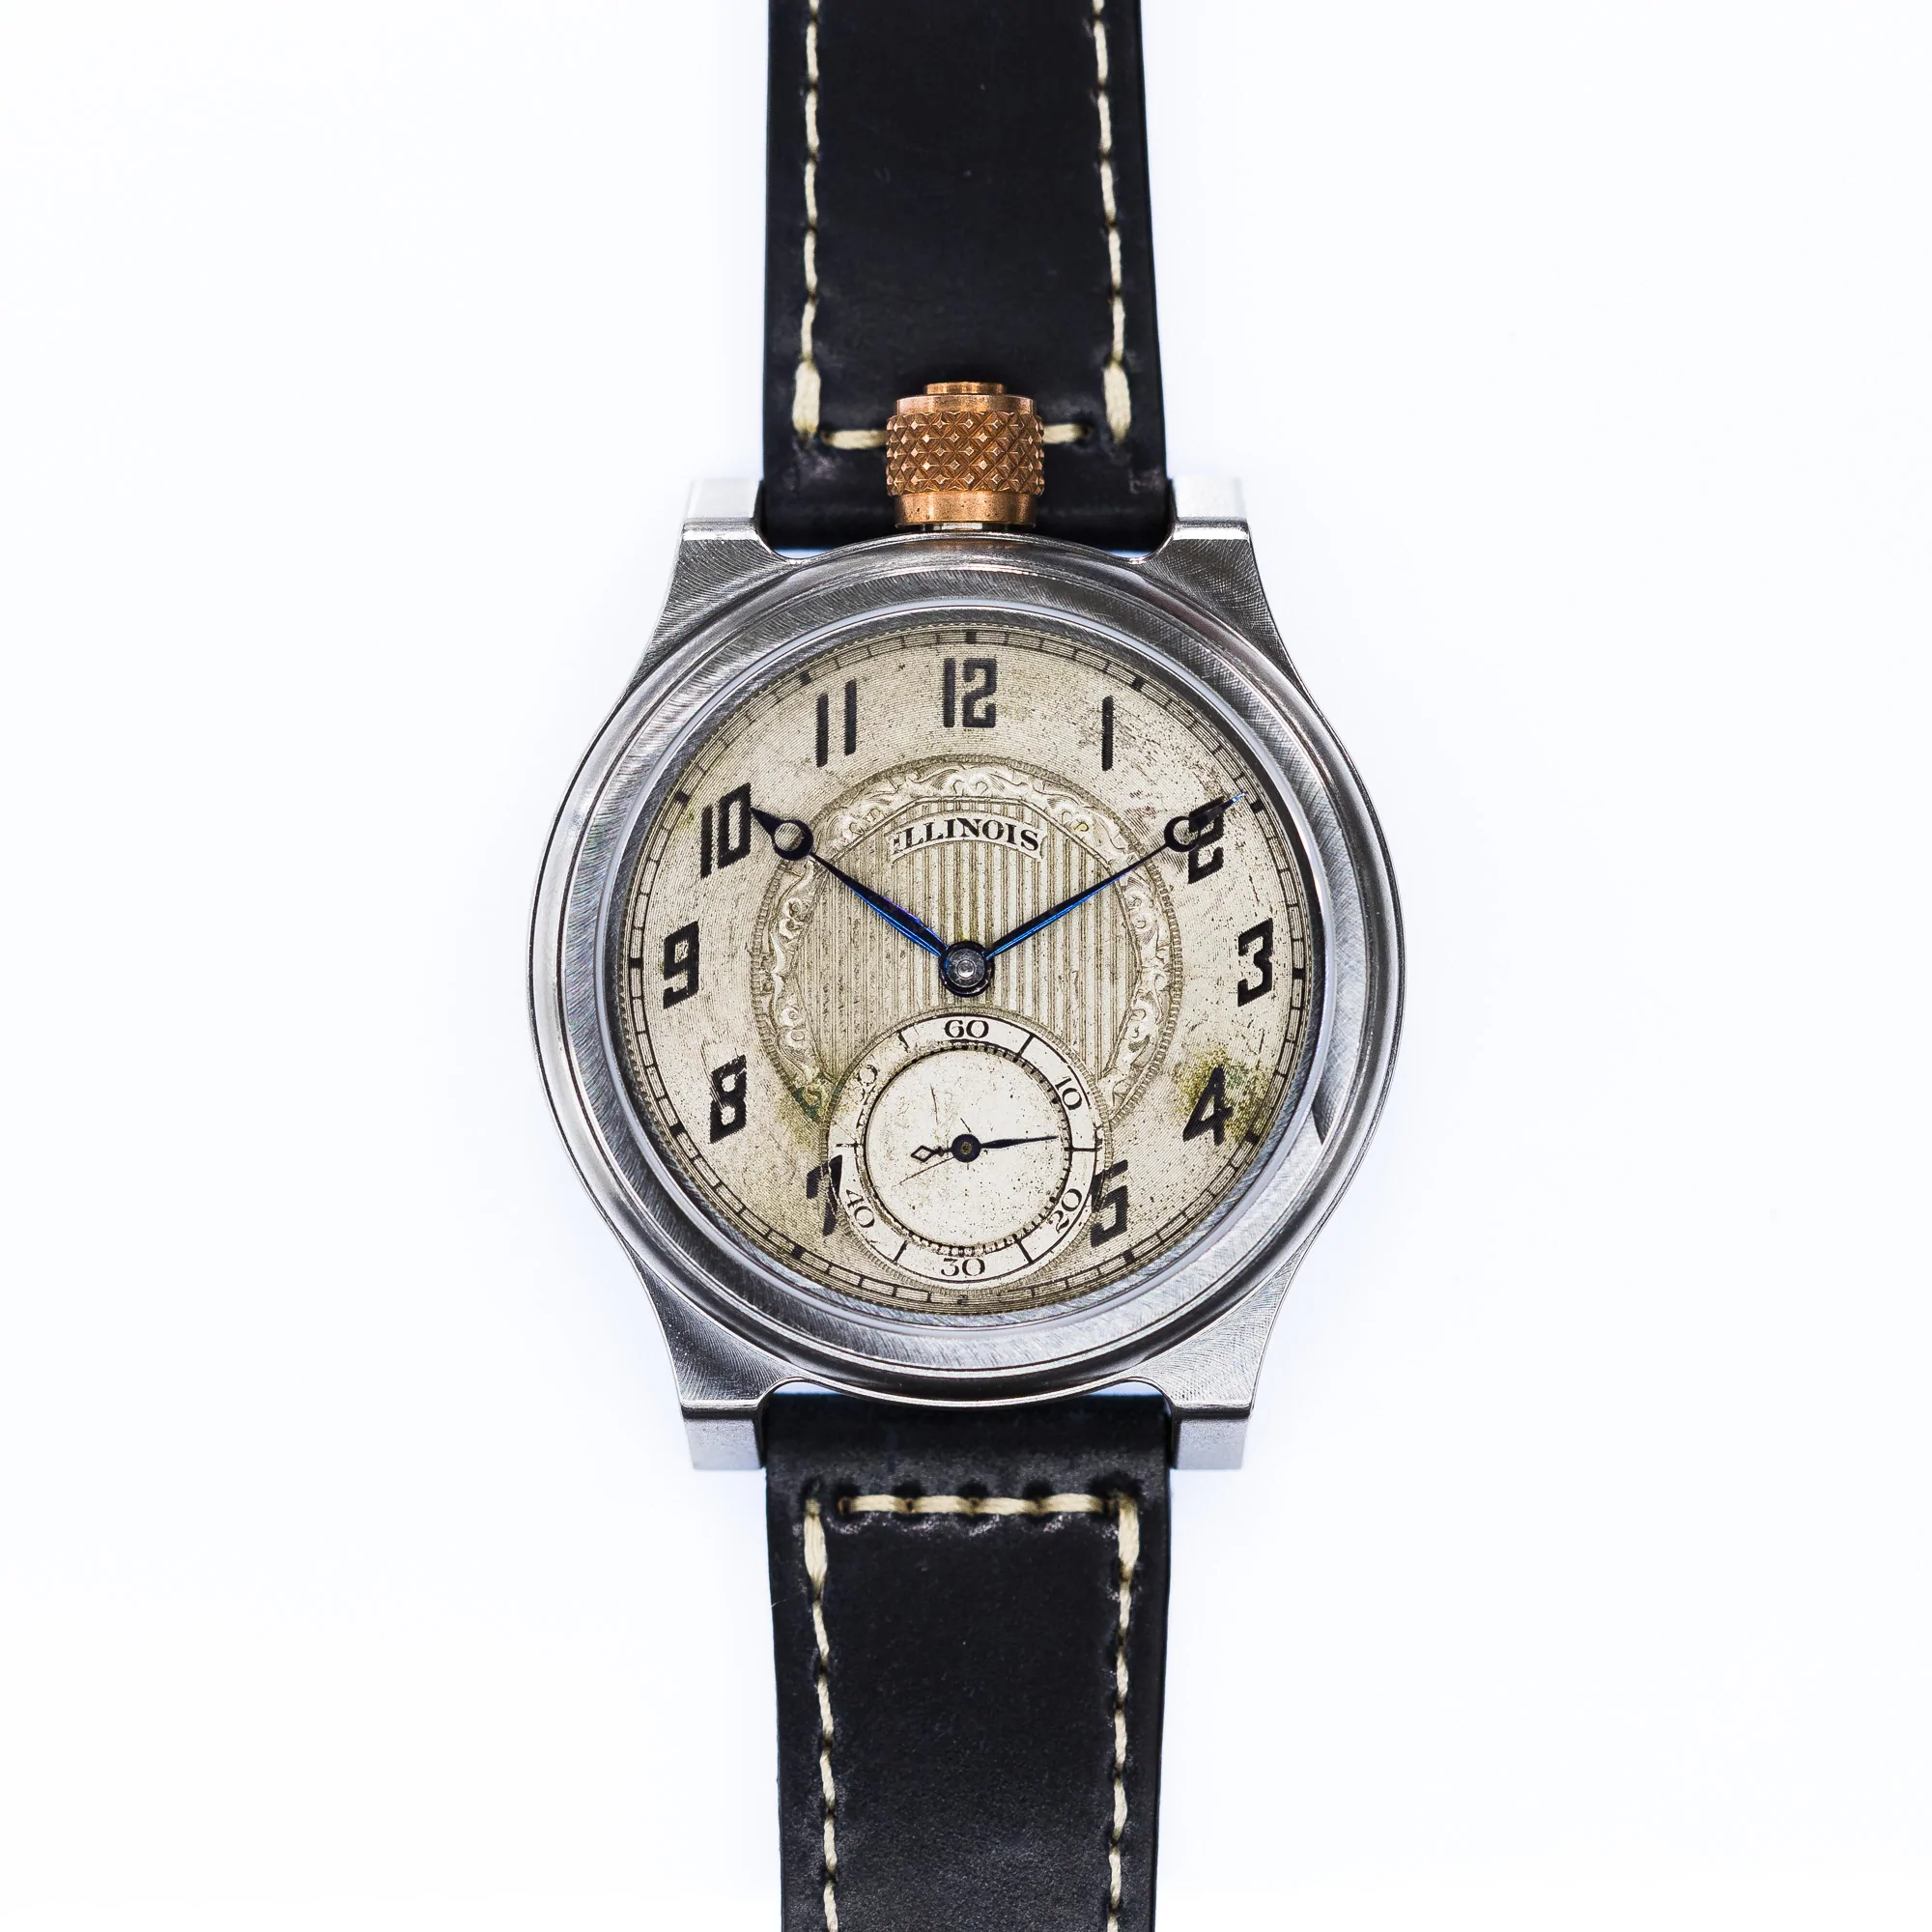 Vortic Watches Springfield 559 (46 mm)